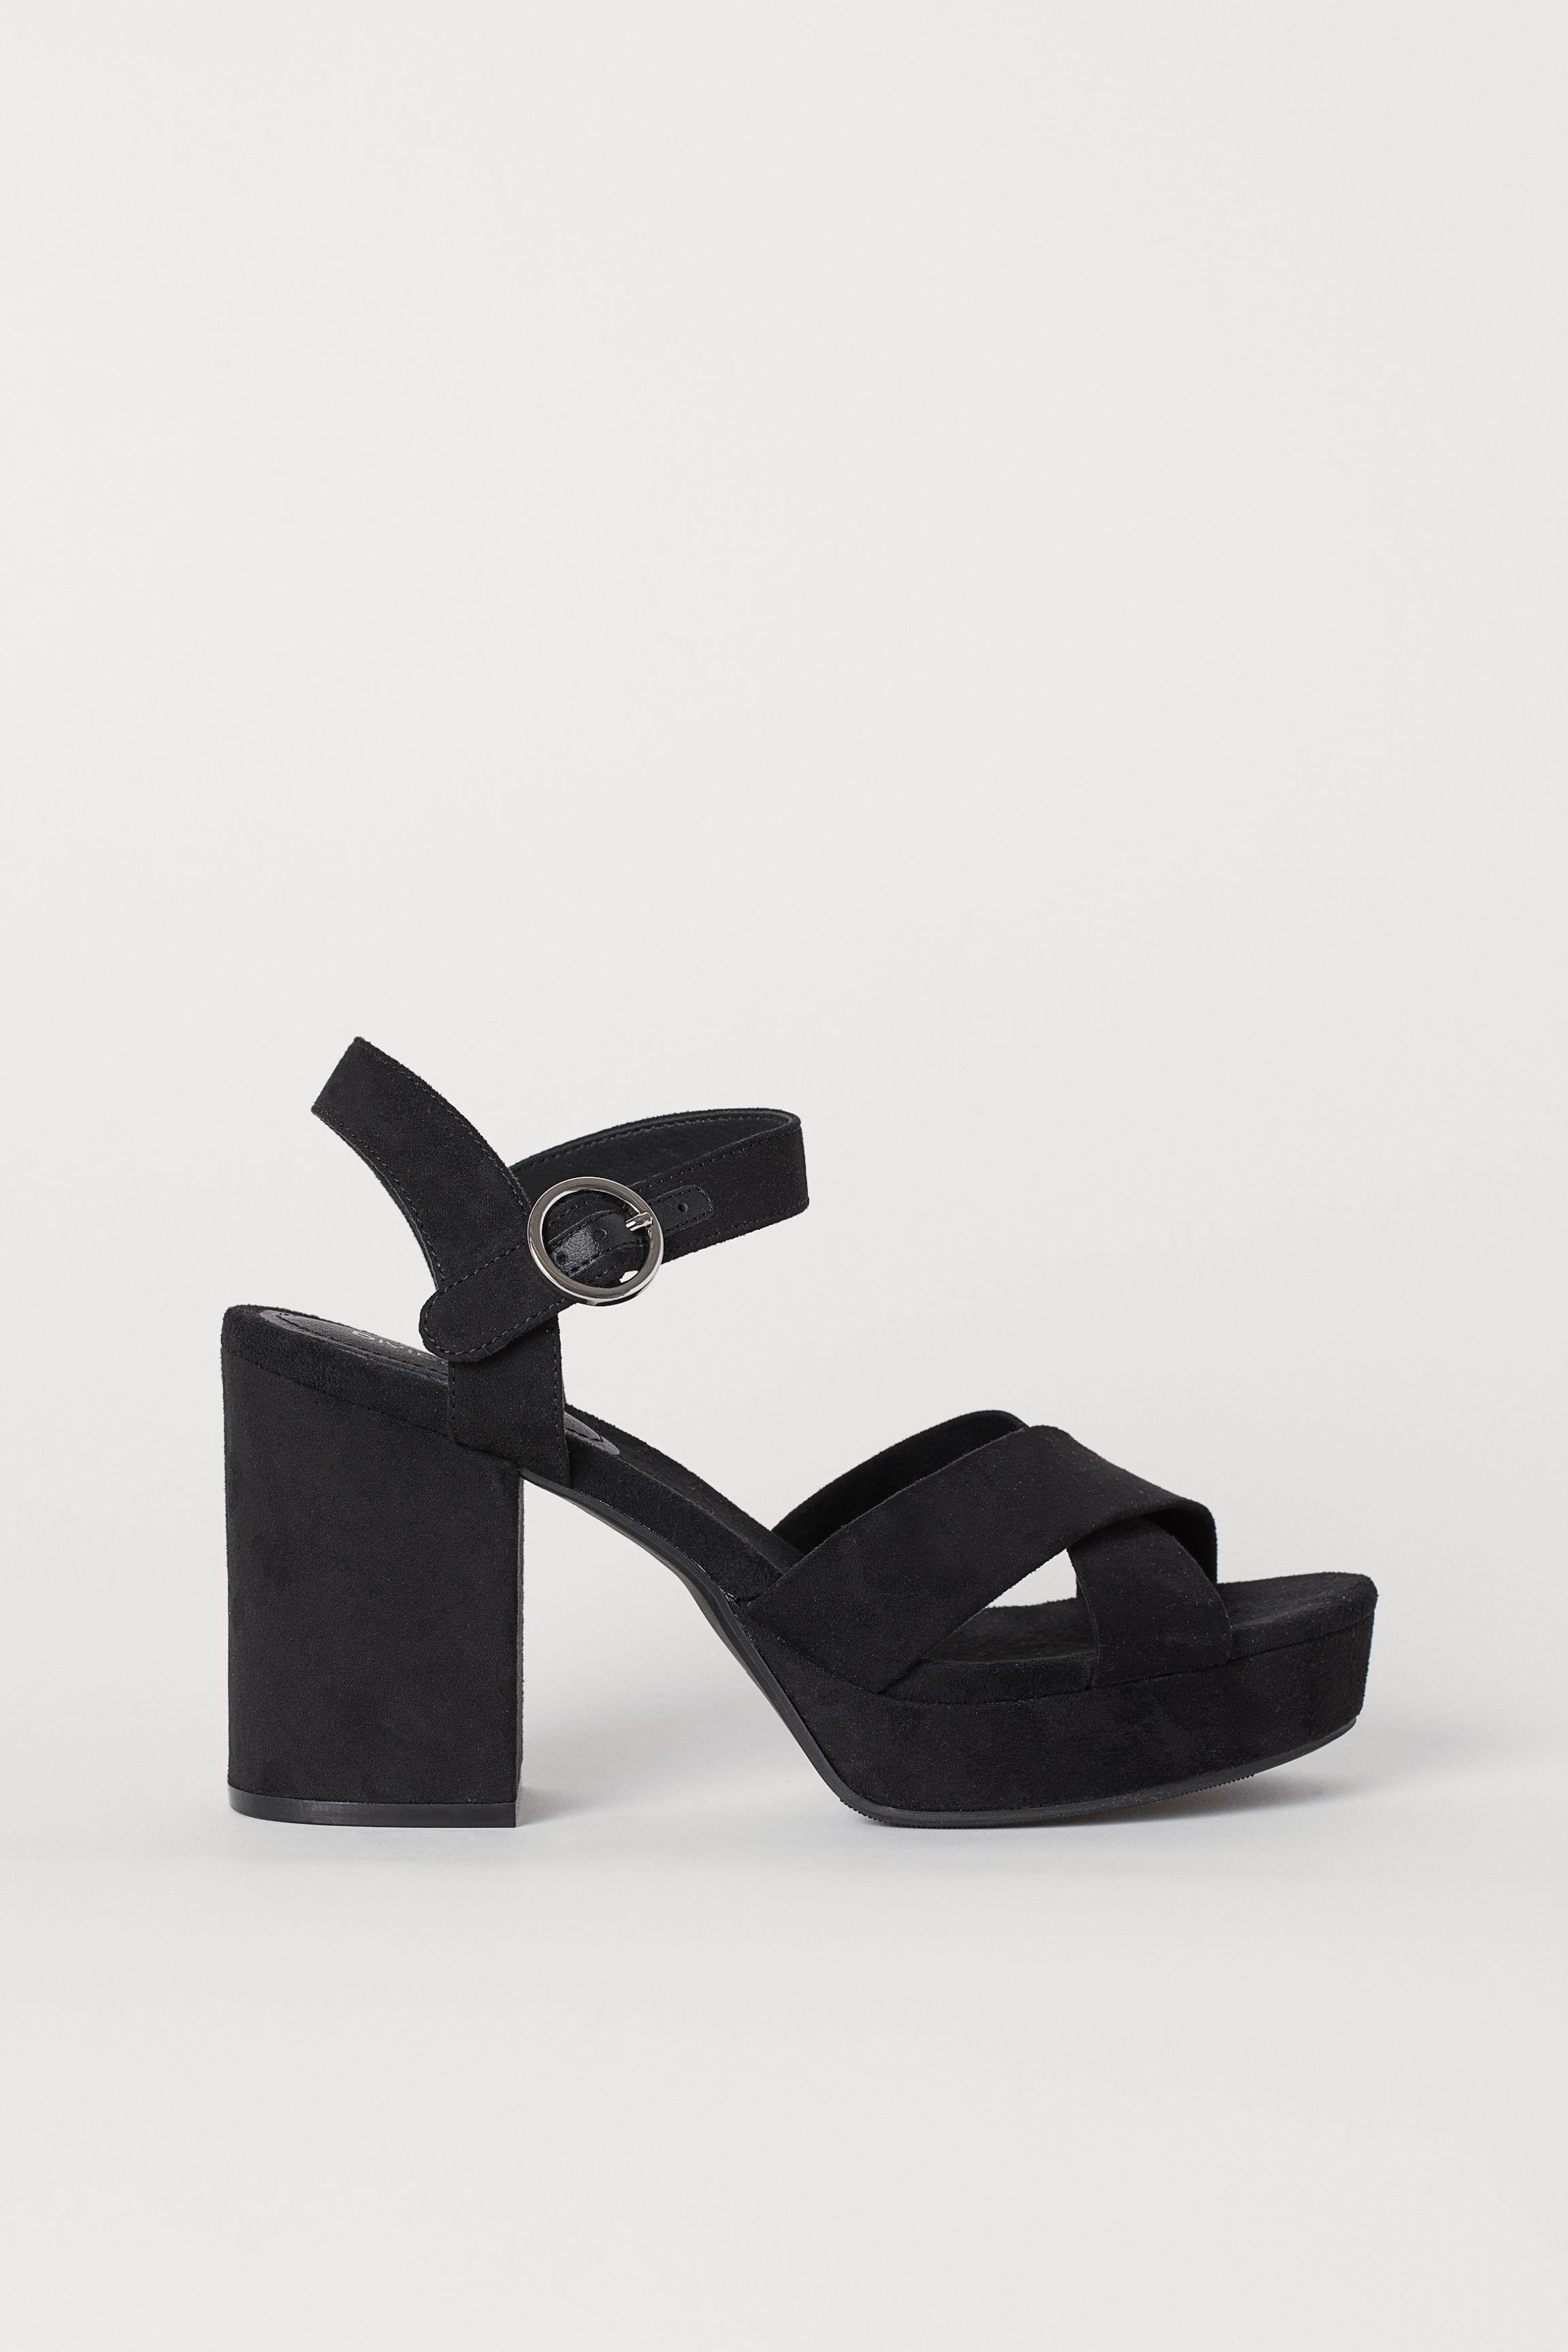 Lyst - H&M Platform Sandals in Black